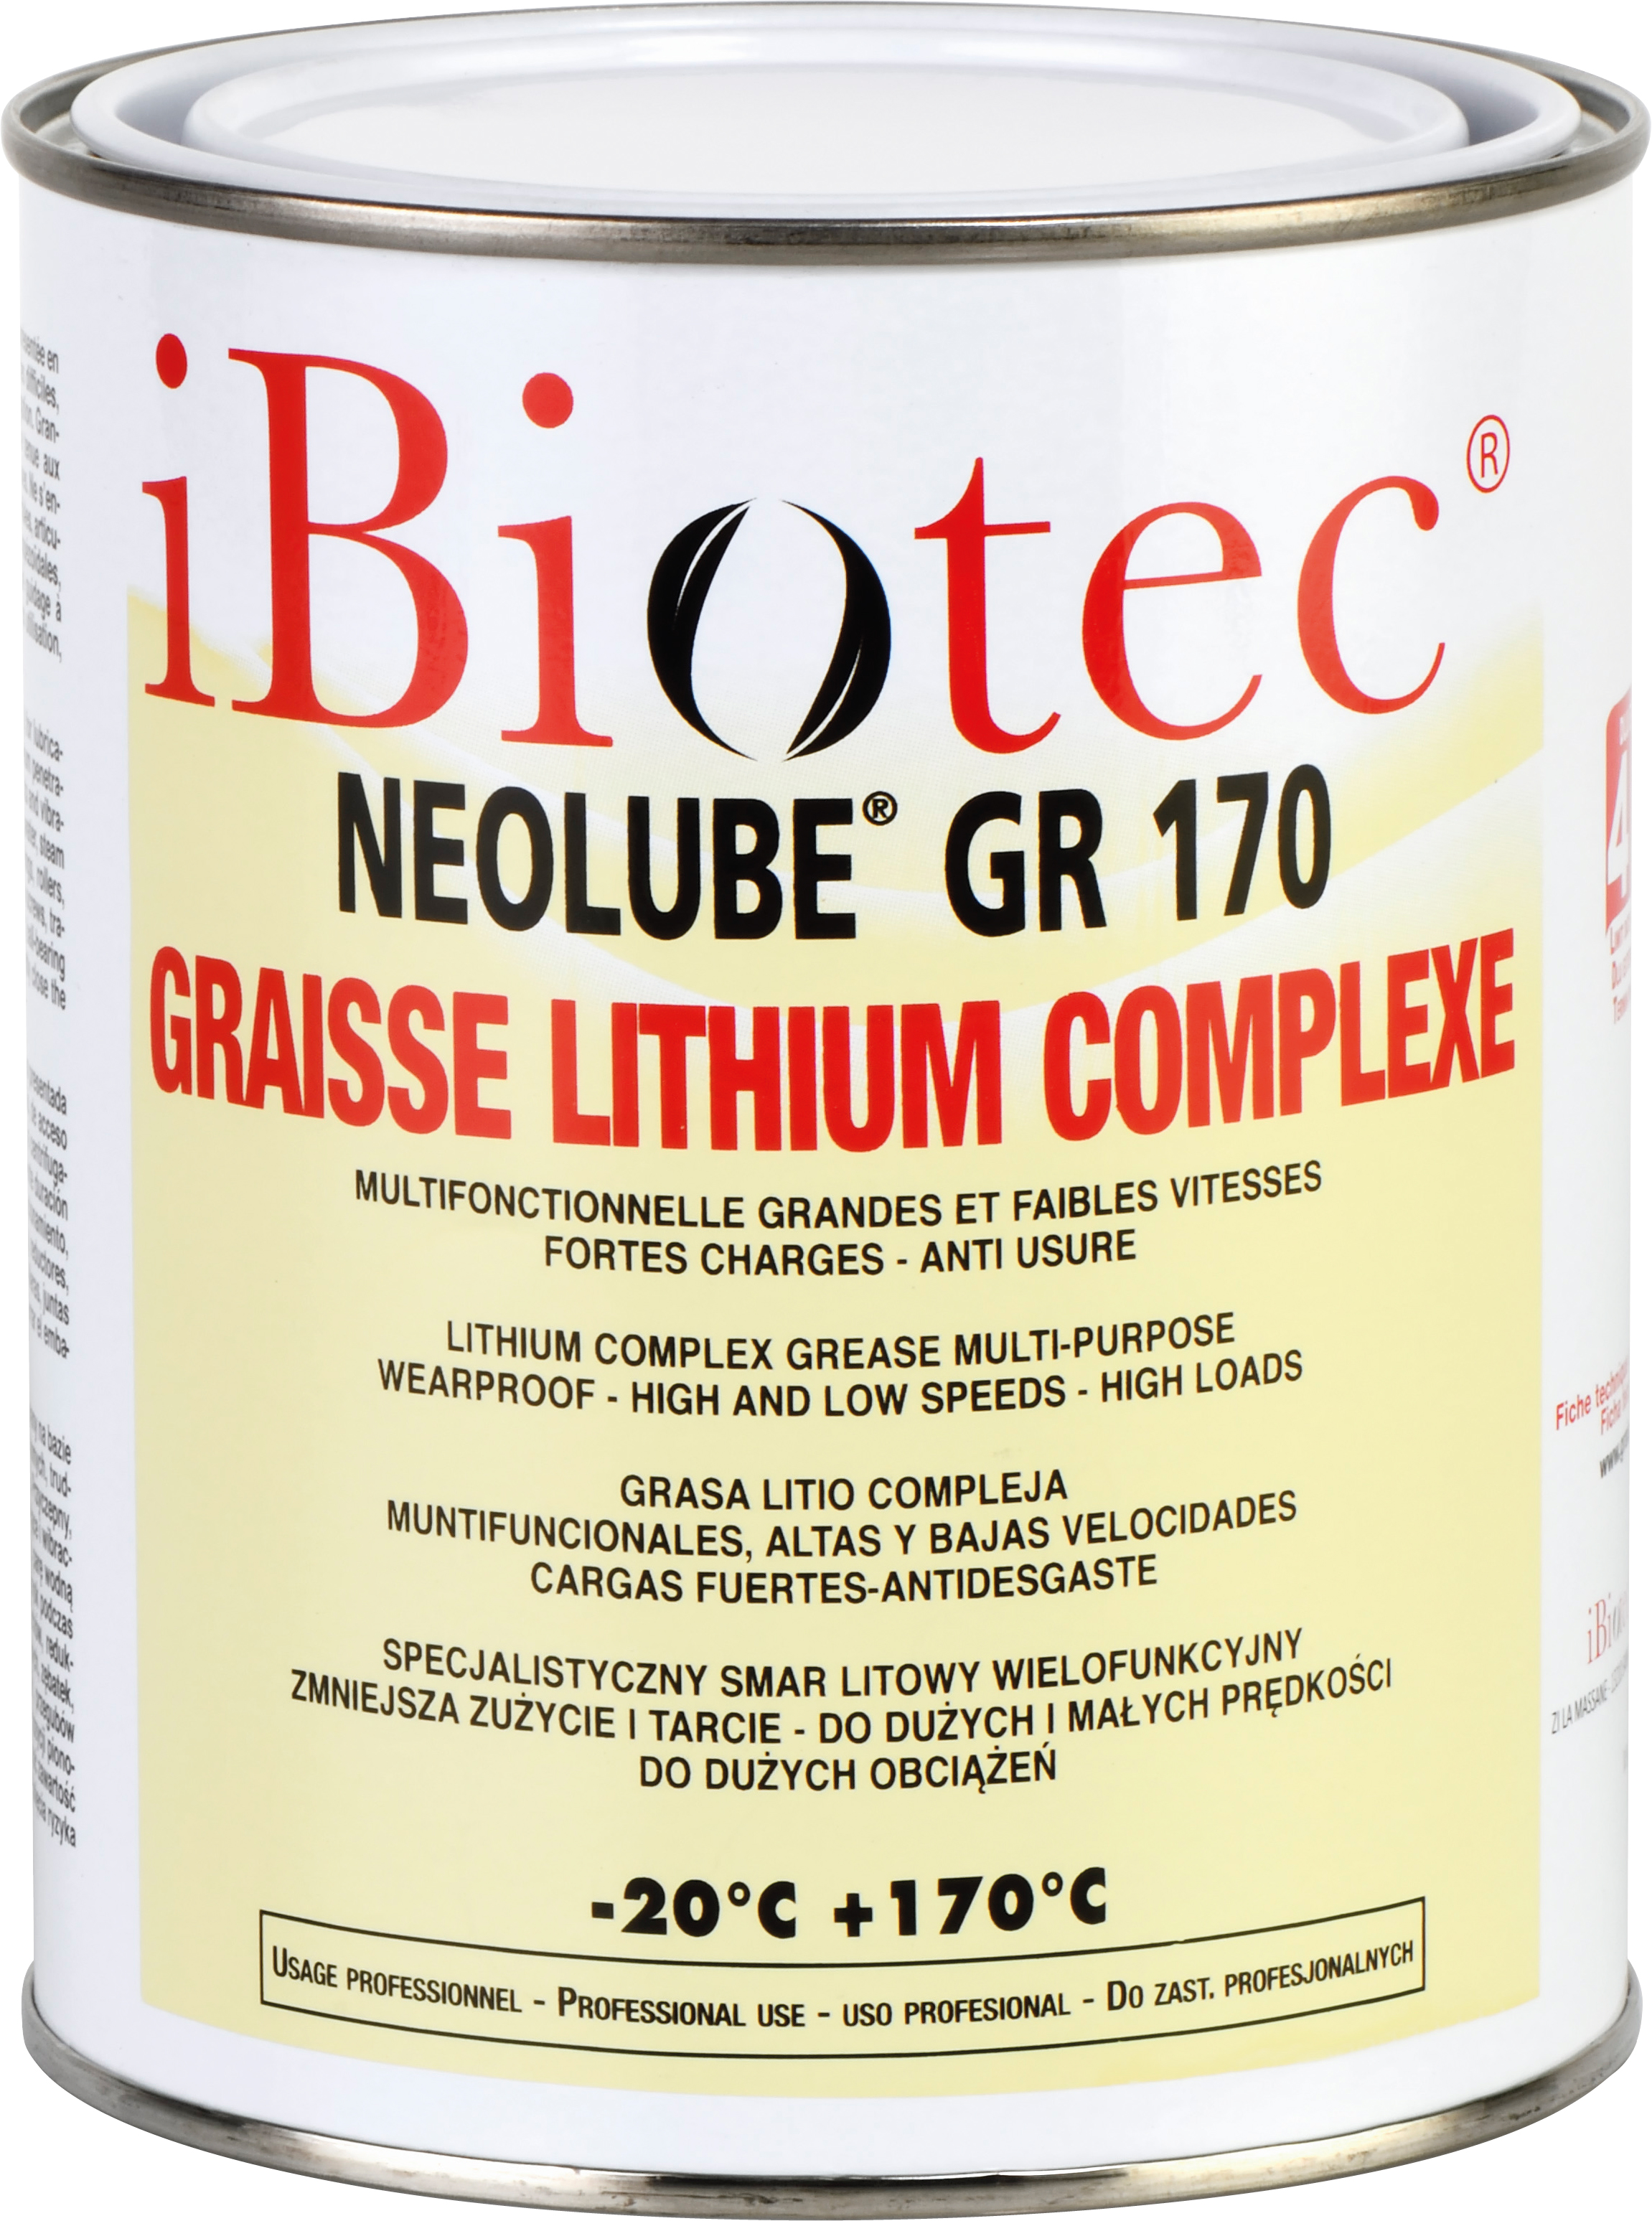 Graisse lithium complexe très haute performance NEOLUBE GR230